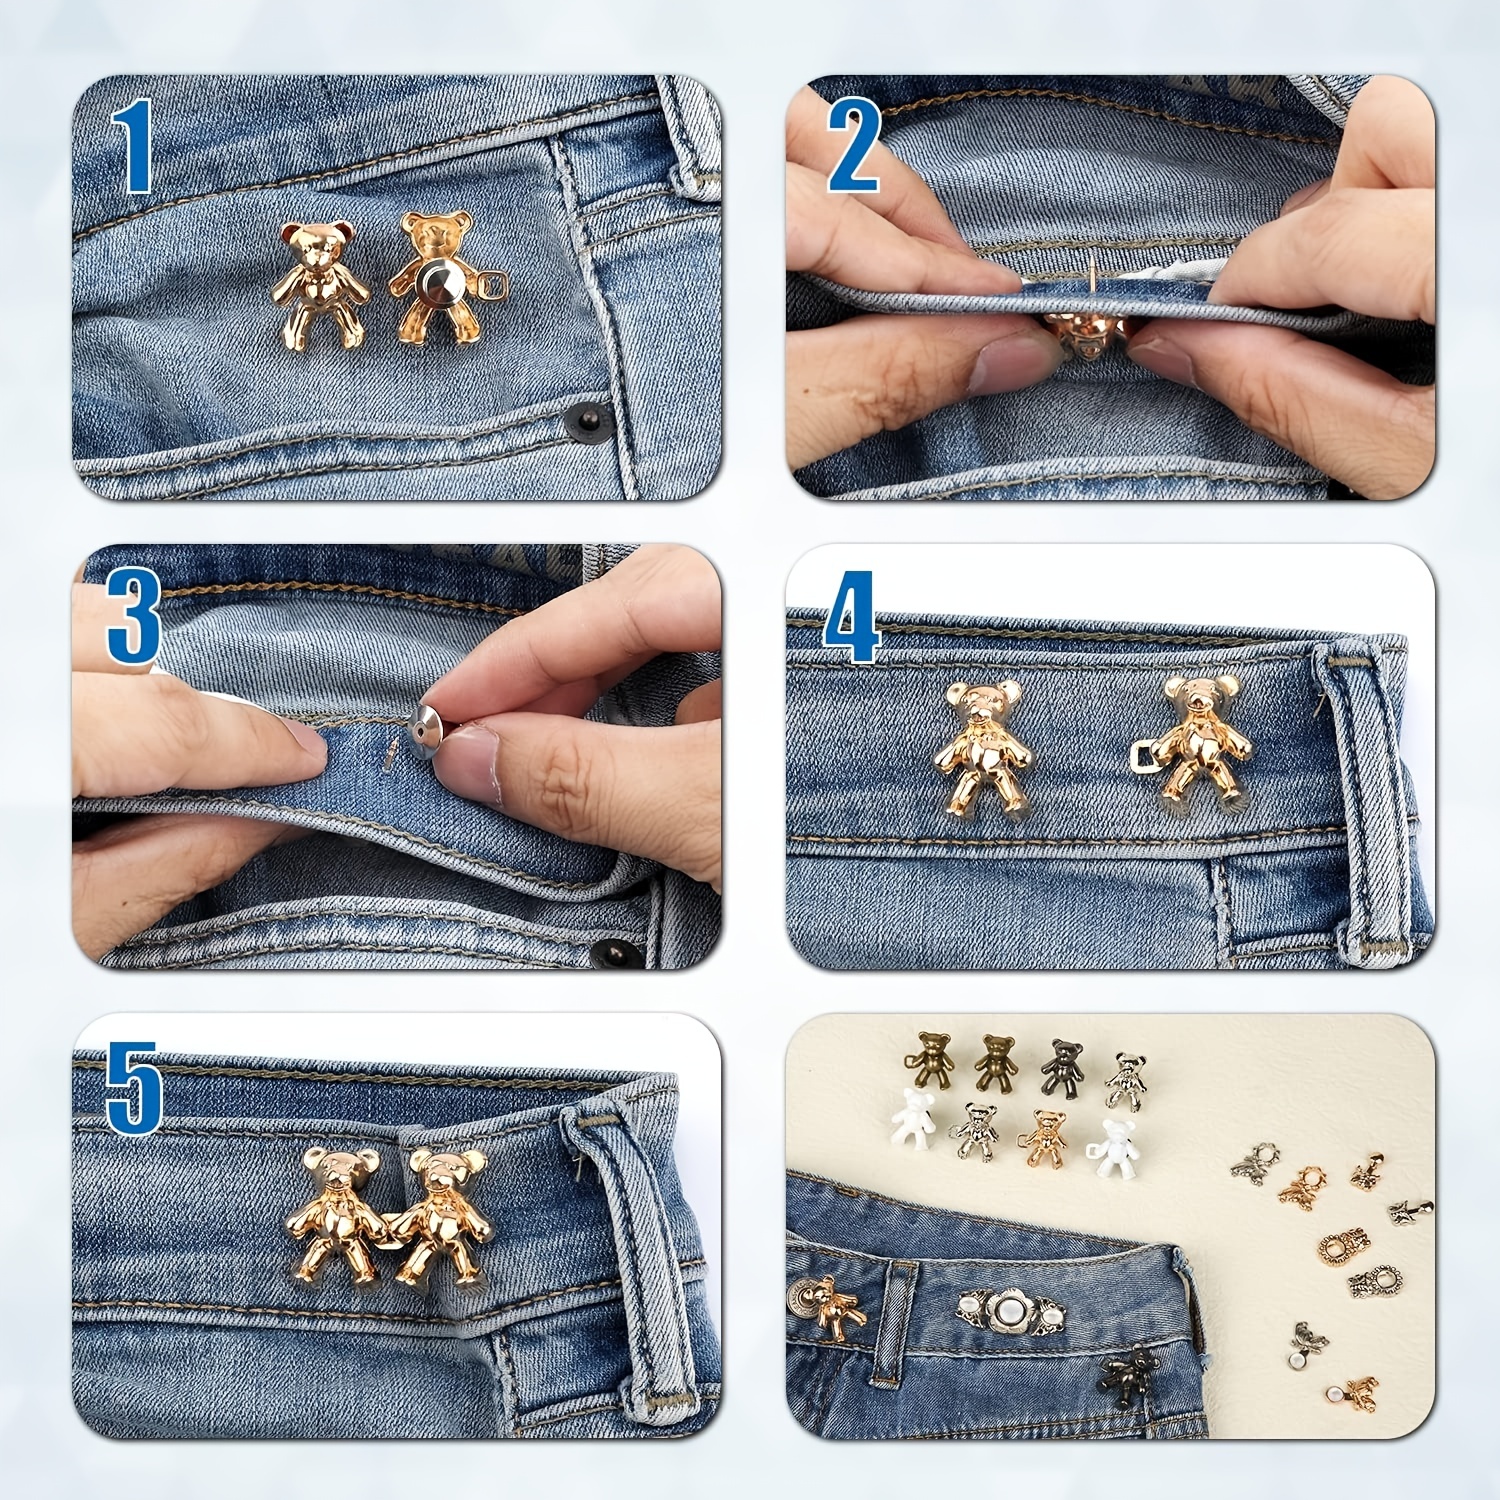 PANTS BUTTON CLIP For Jeans PinsAdjustable Metal Pant Tightener